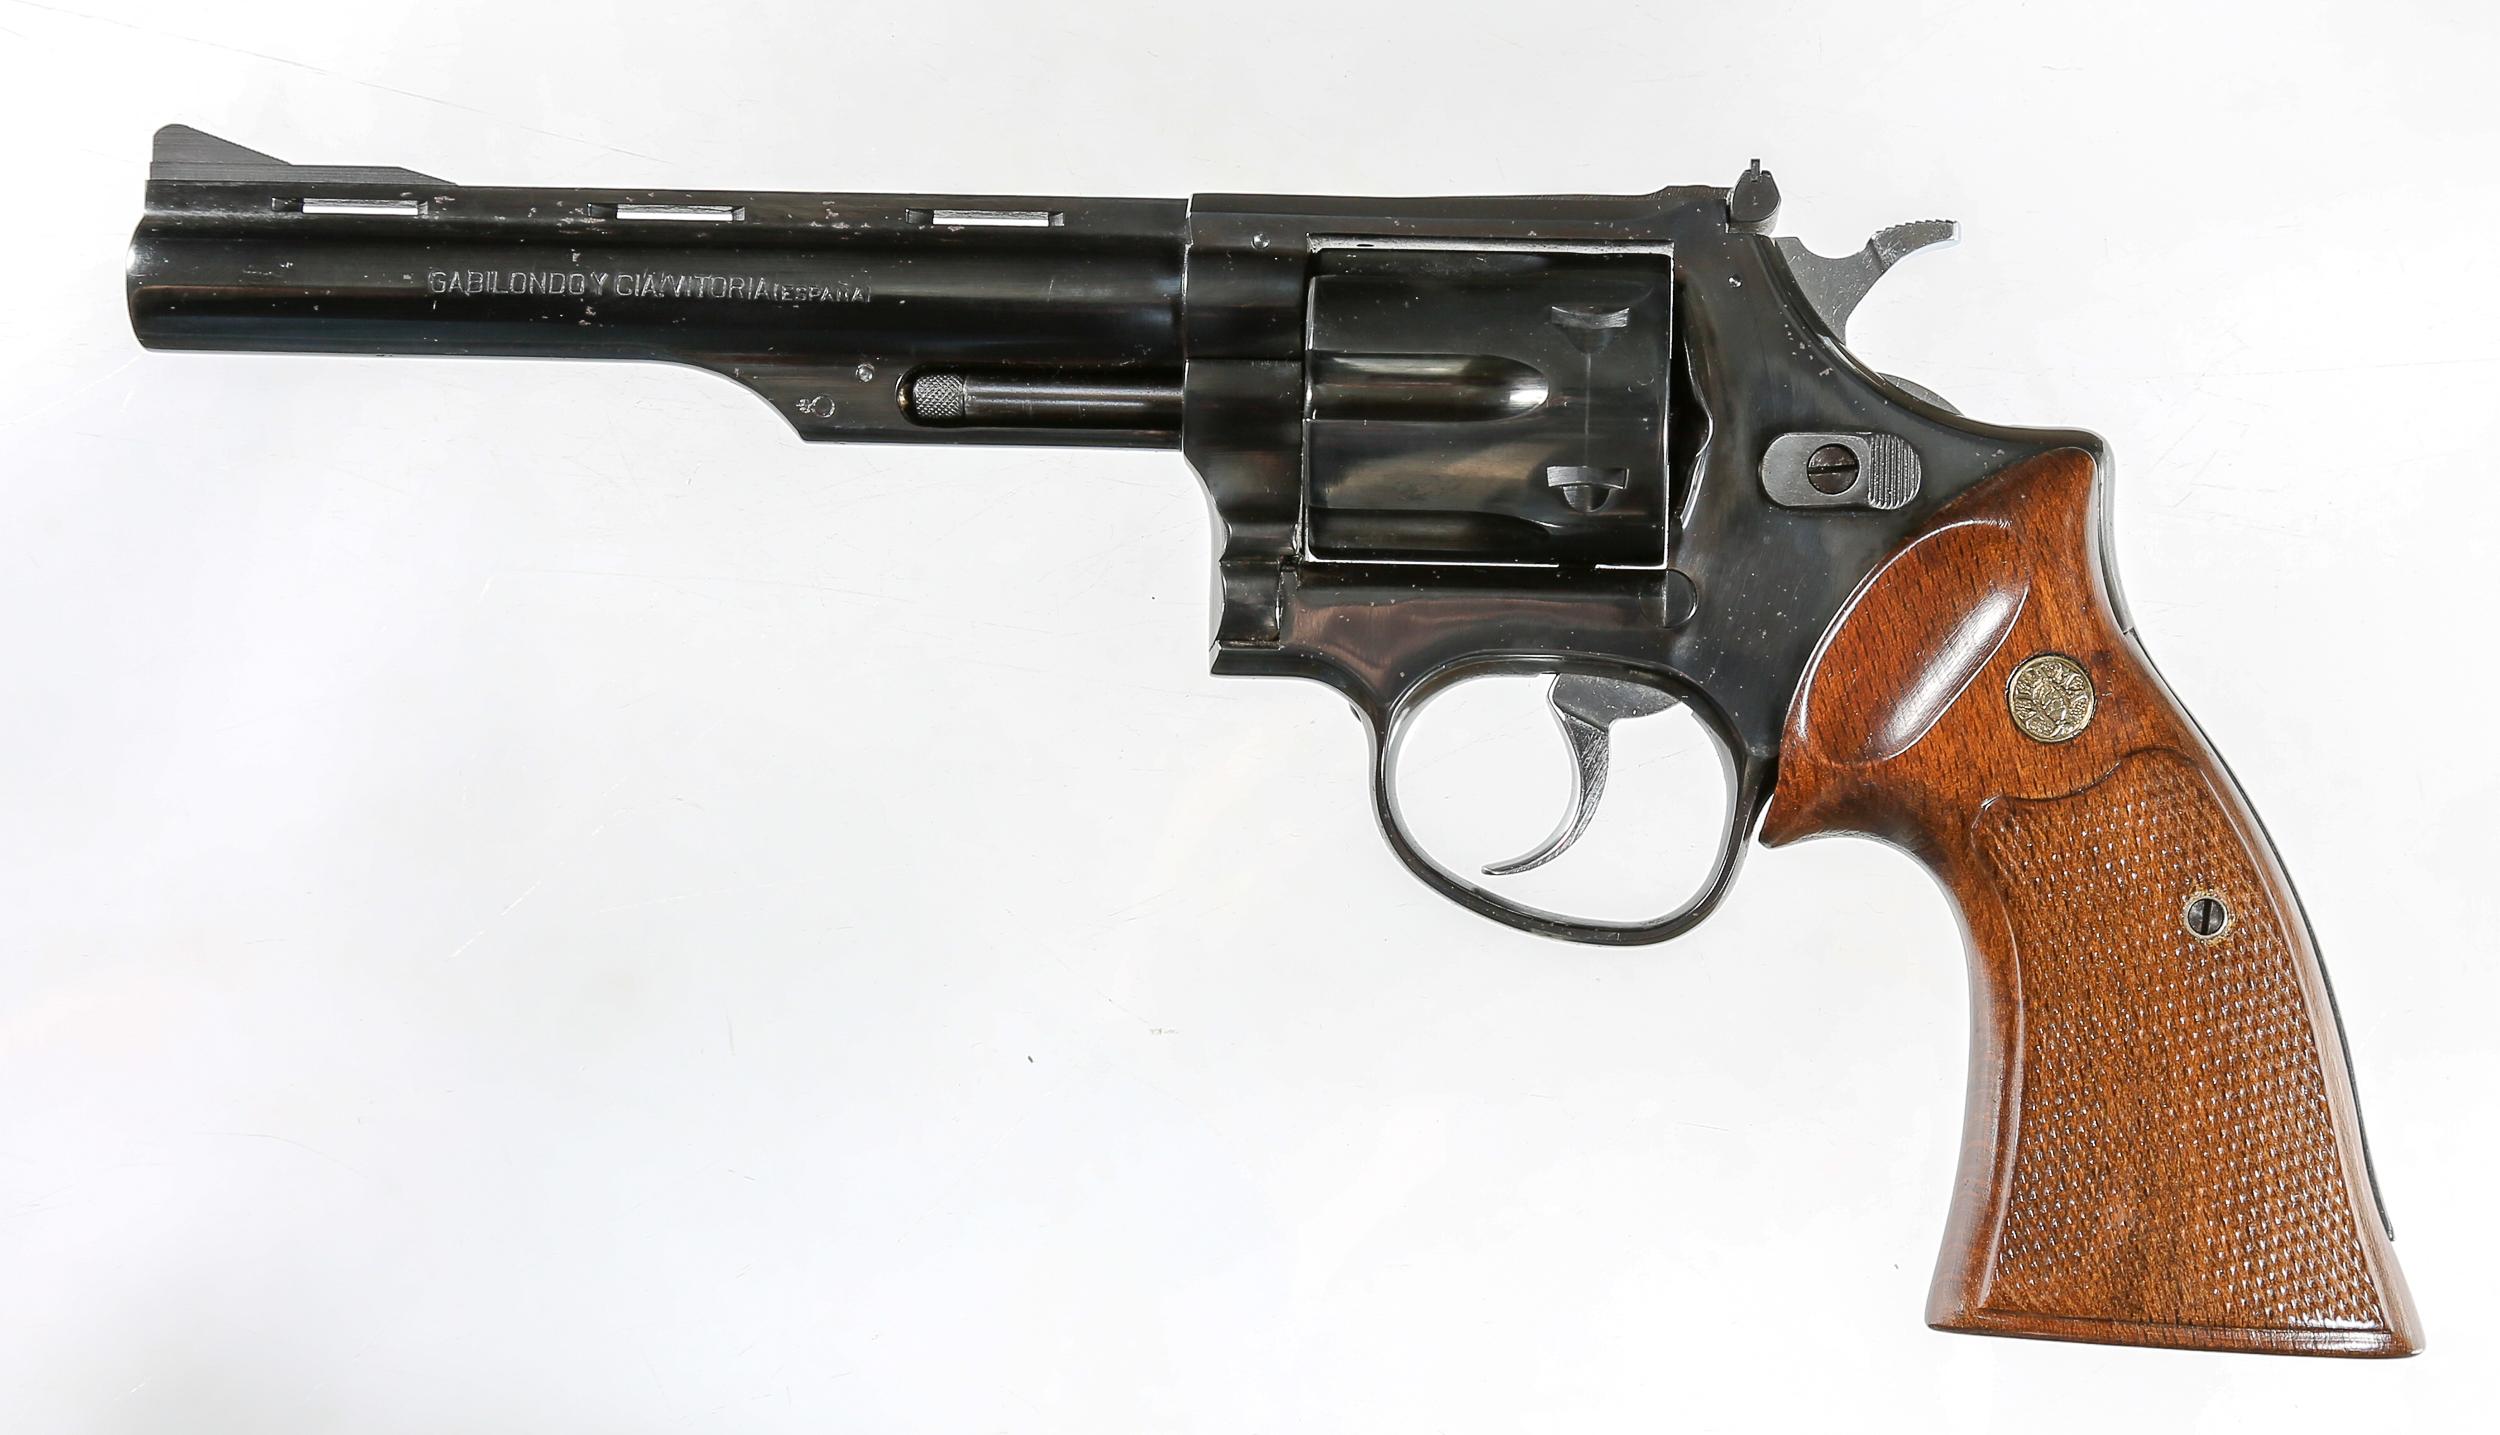 Llama Comanche Revolver .357 mag